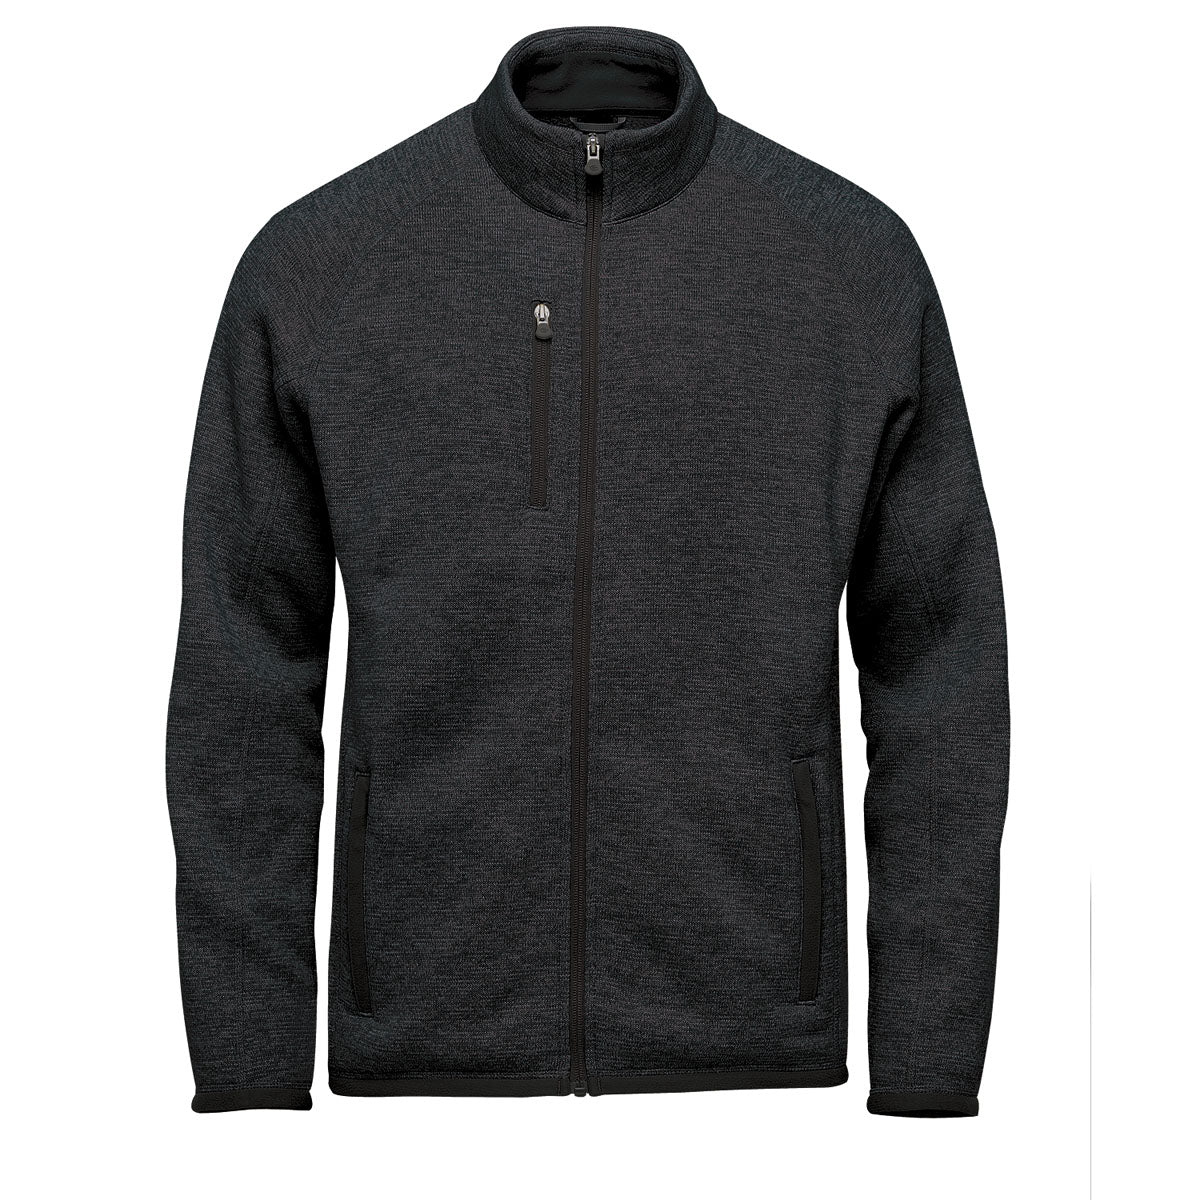 Men's Avalanche Wear Fleece Knit Jacket Size XL, Dark Gray Zippered Pockets  